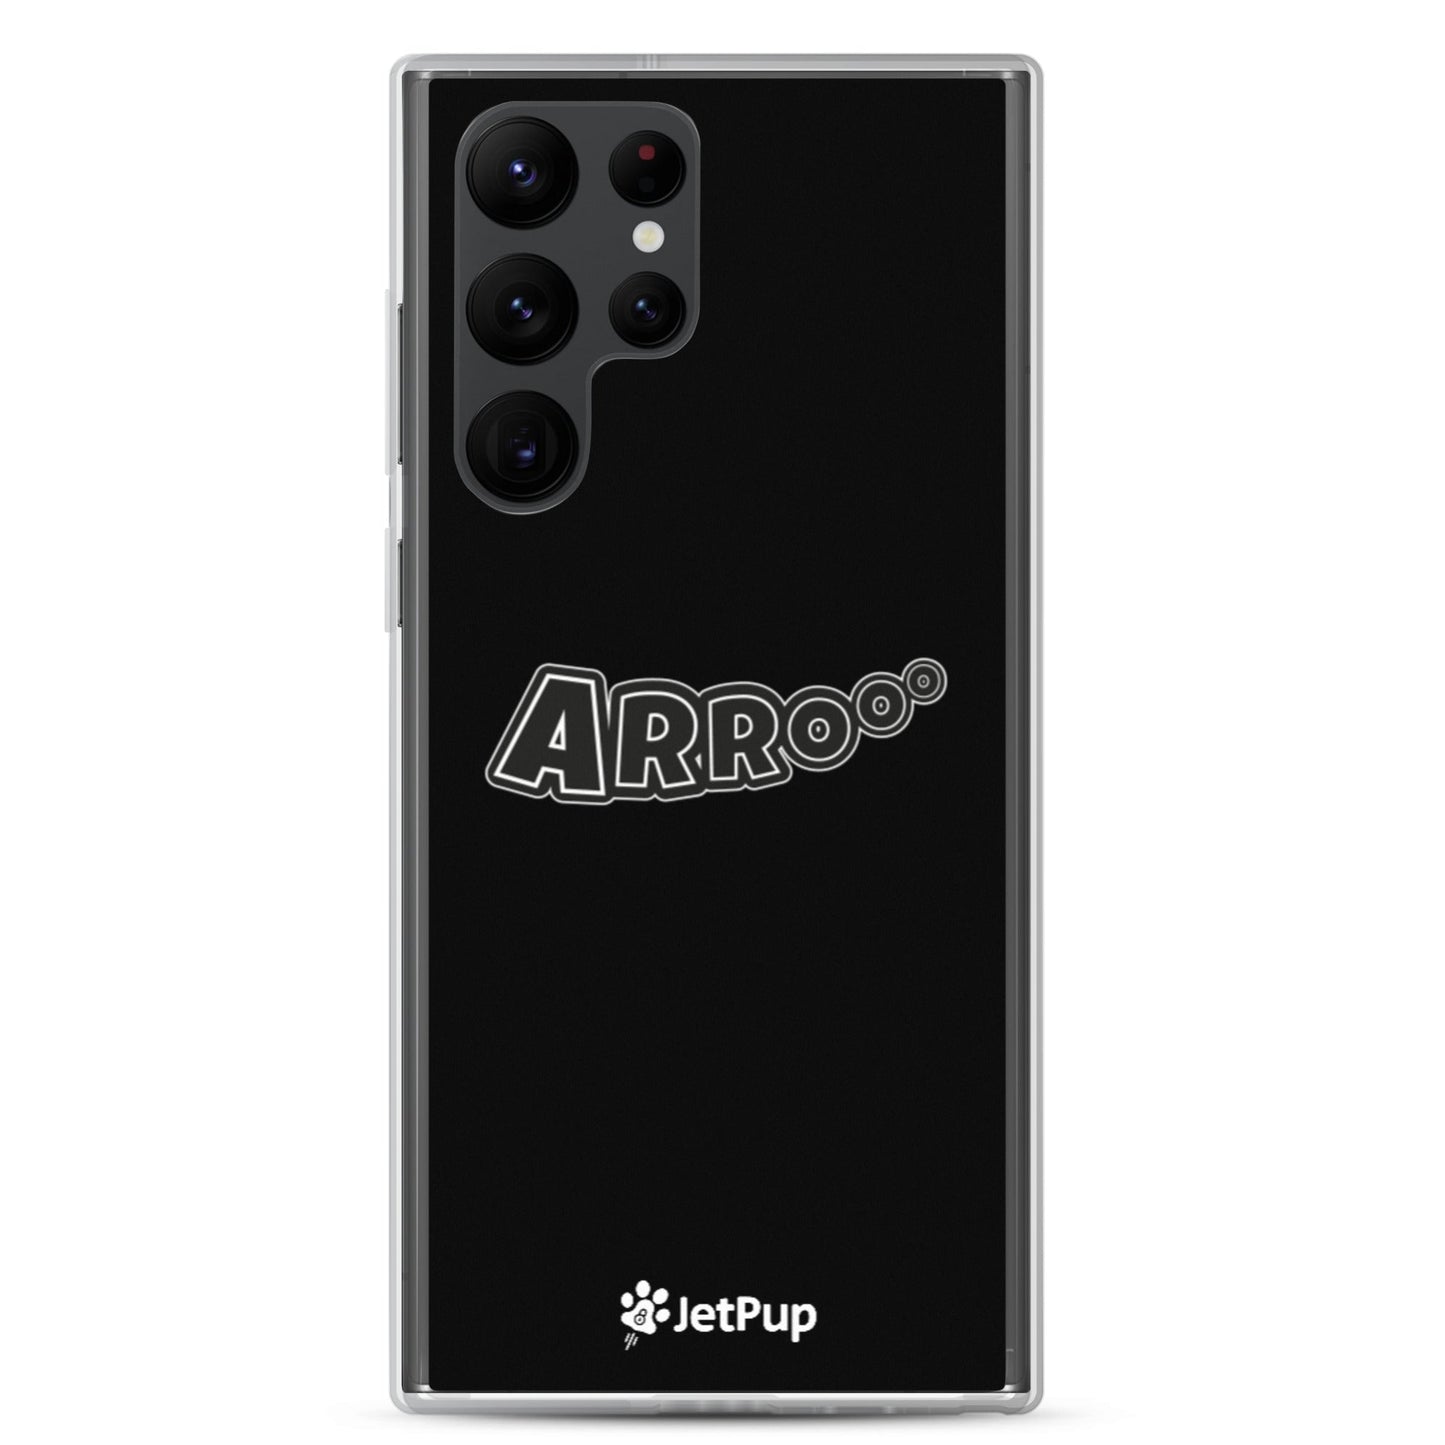 Arrooo Samsung Case - Black - JetPup